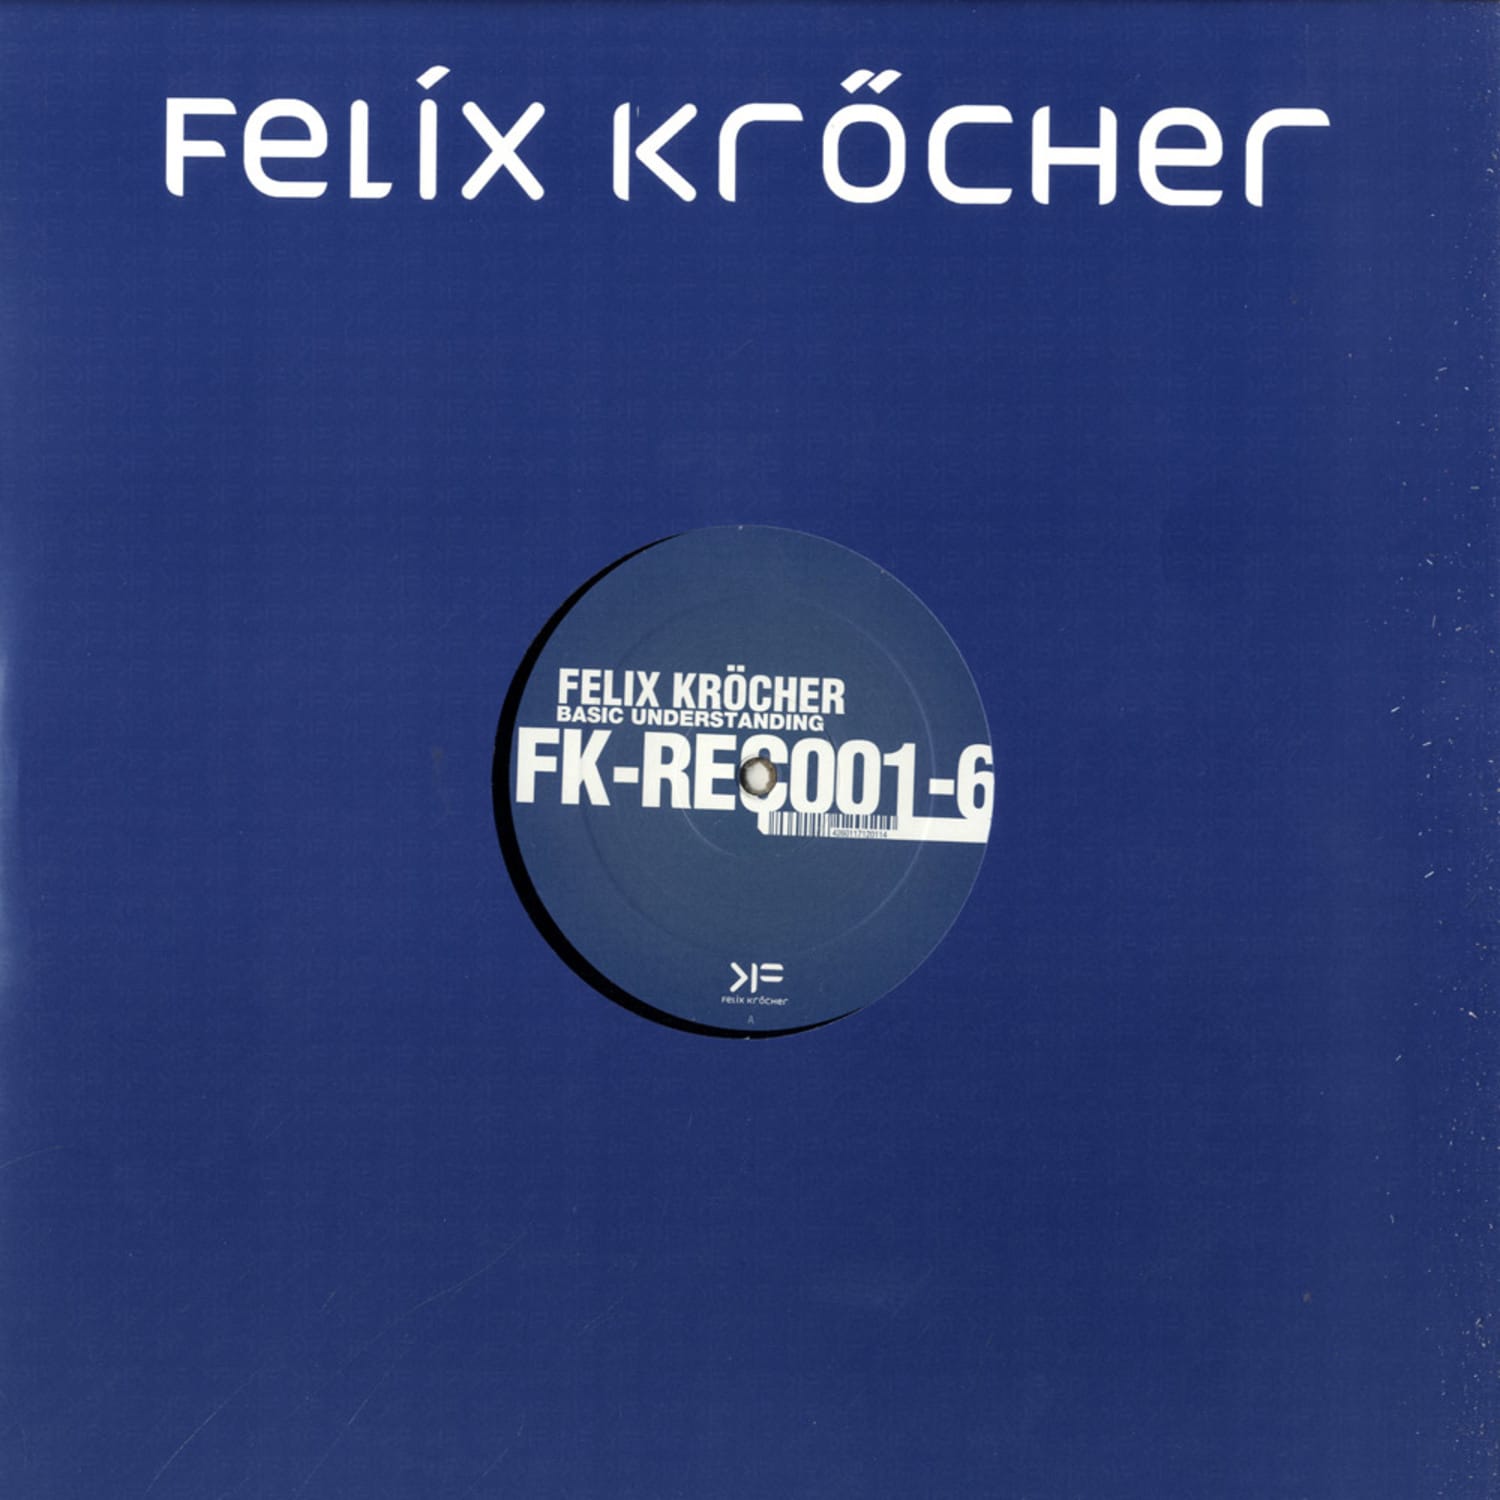 Felix Kroecher - BASIC UNDERSTANDING